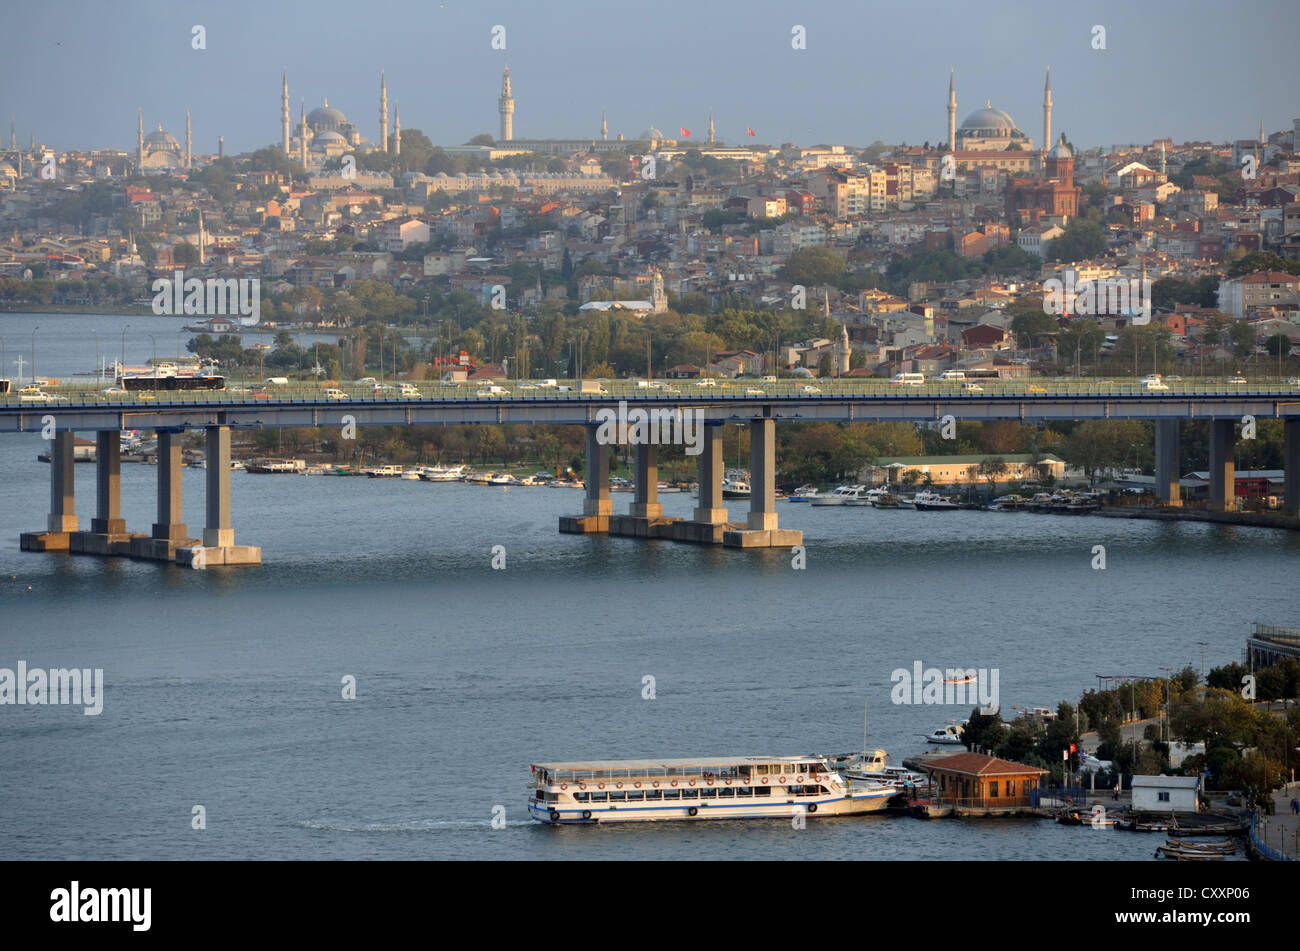 Haliç Bridge over the Golden Horn, Istanbul. Stock Photo